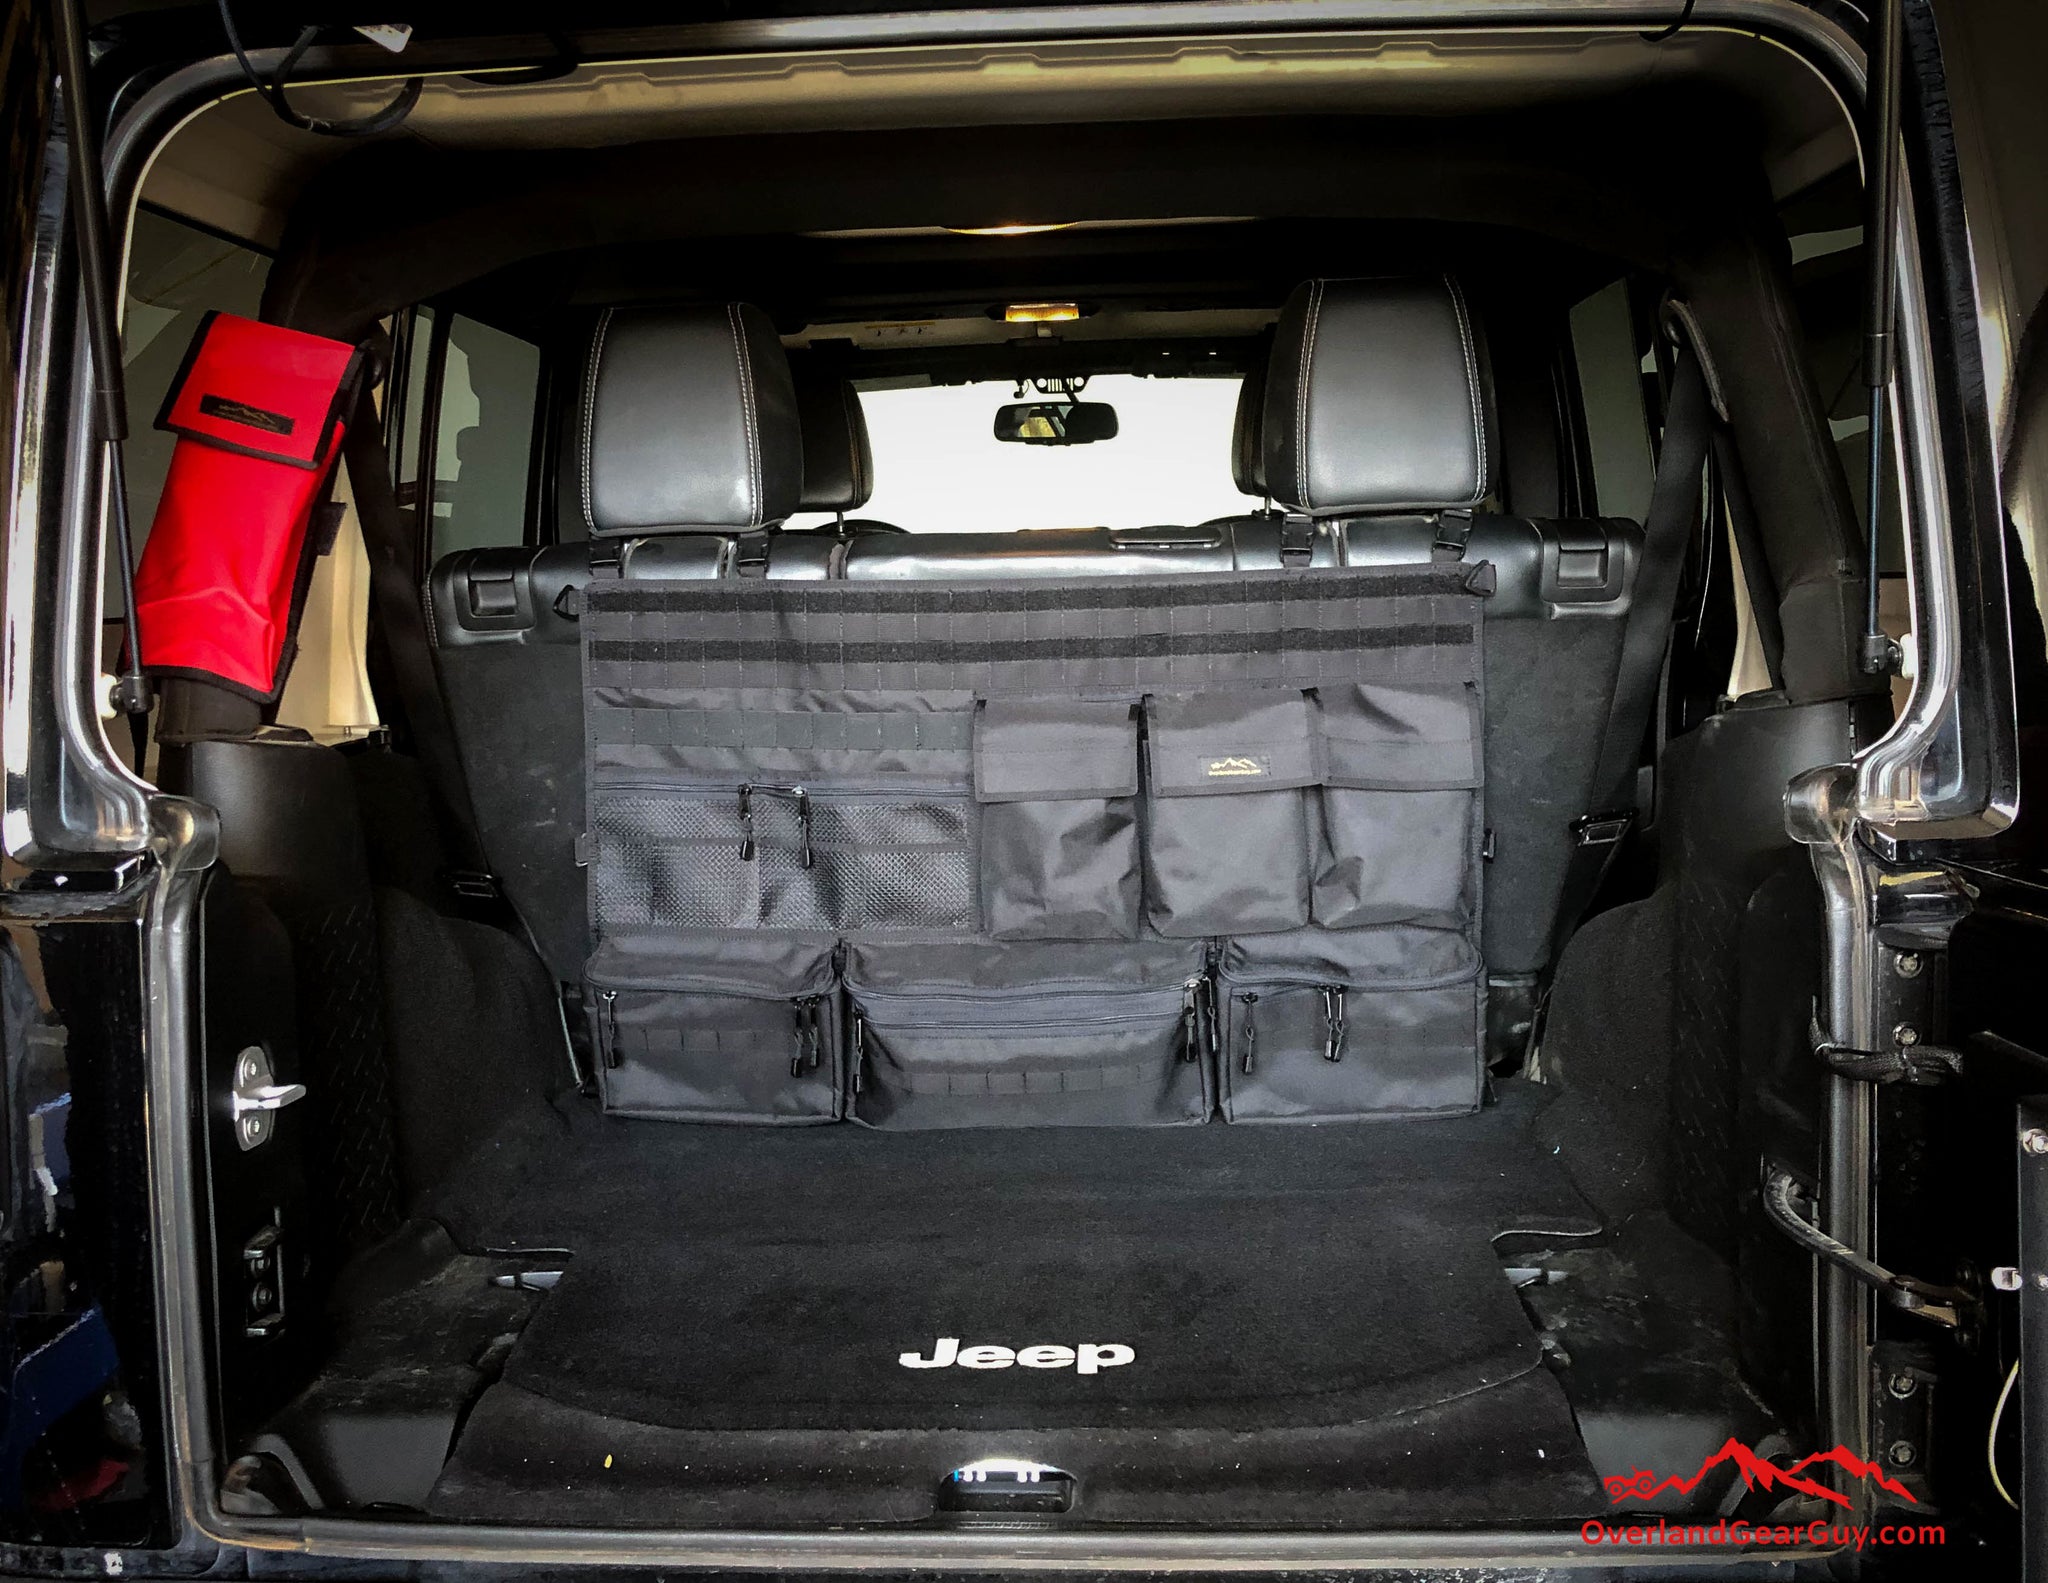 Jeep Rear Organizer - Jeep Vehicle Storage by Overland Gear Guy